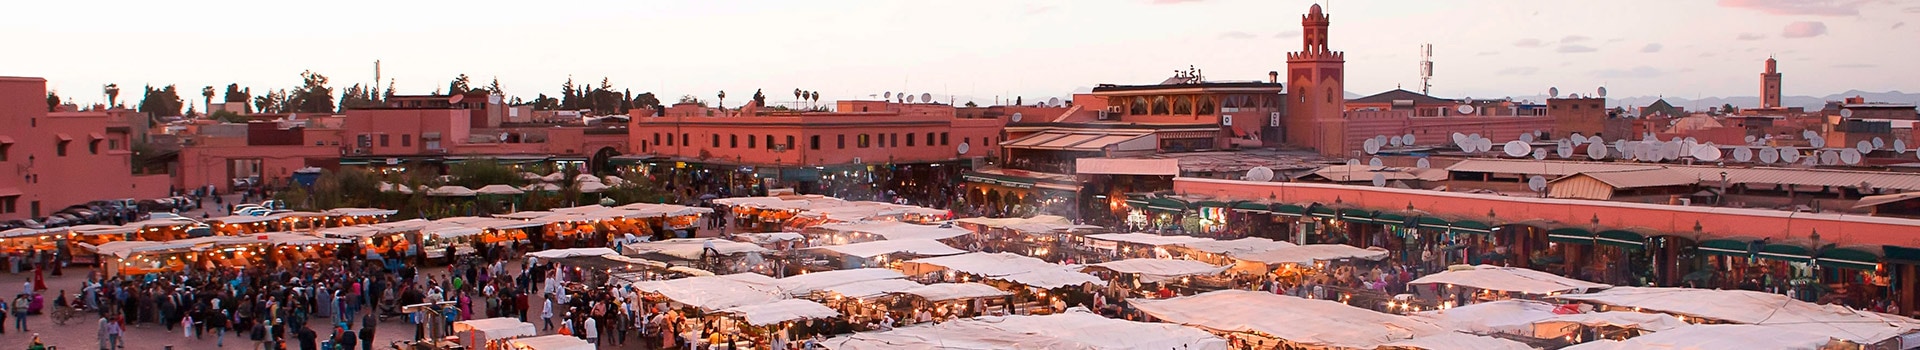 Ténérife - Marrakech